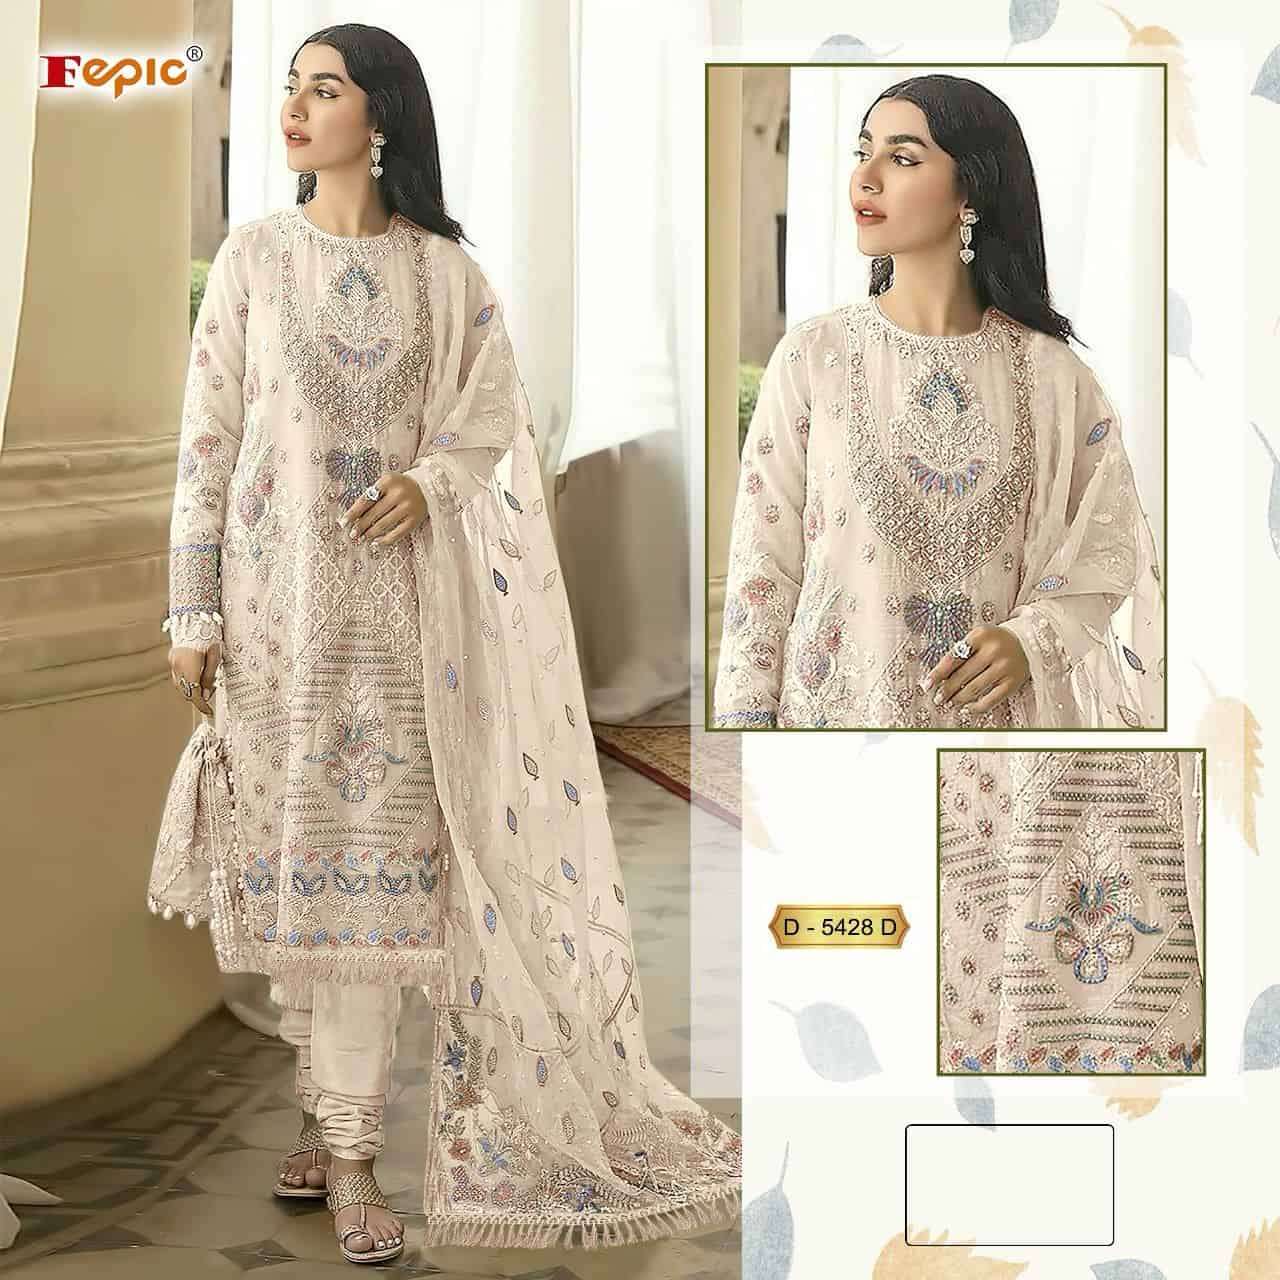 Fepic C 5428 D Pakistani Style Designer Embroidered Unstitched Dress Salears